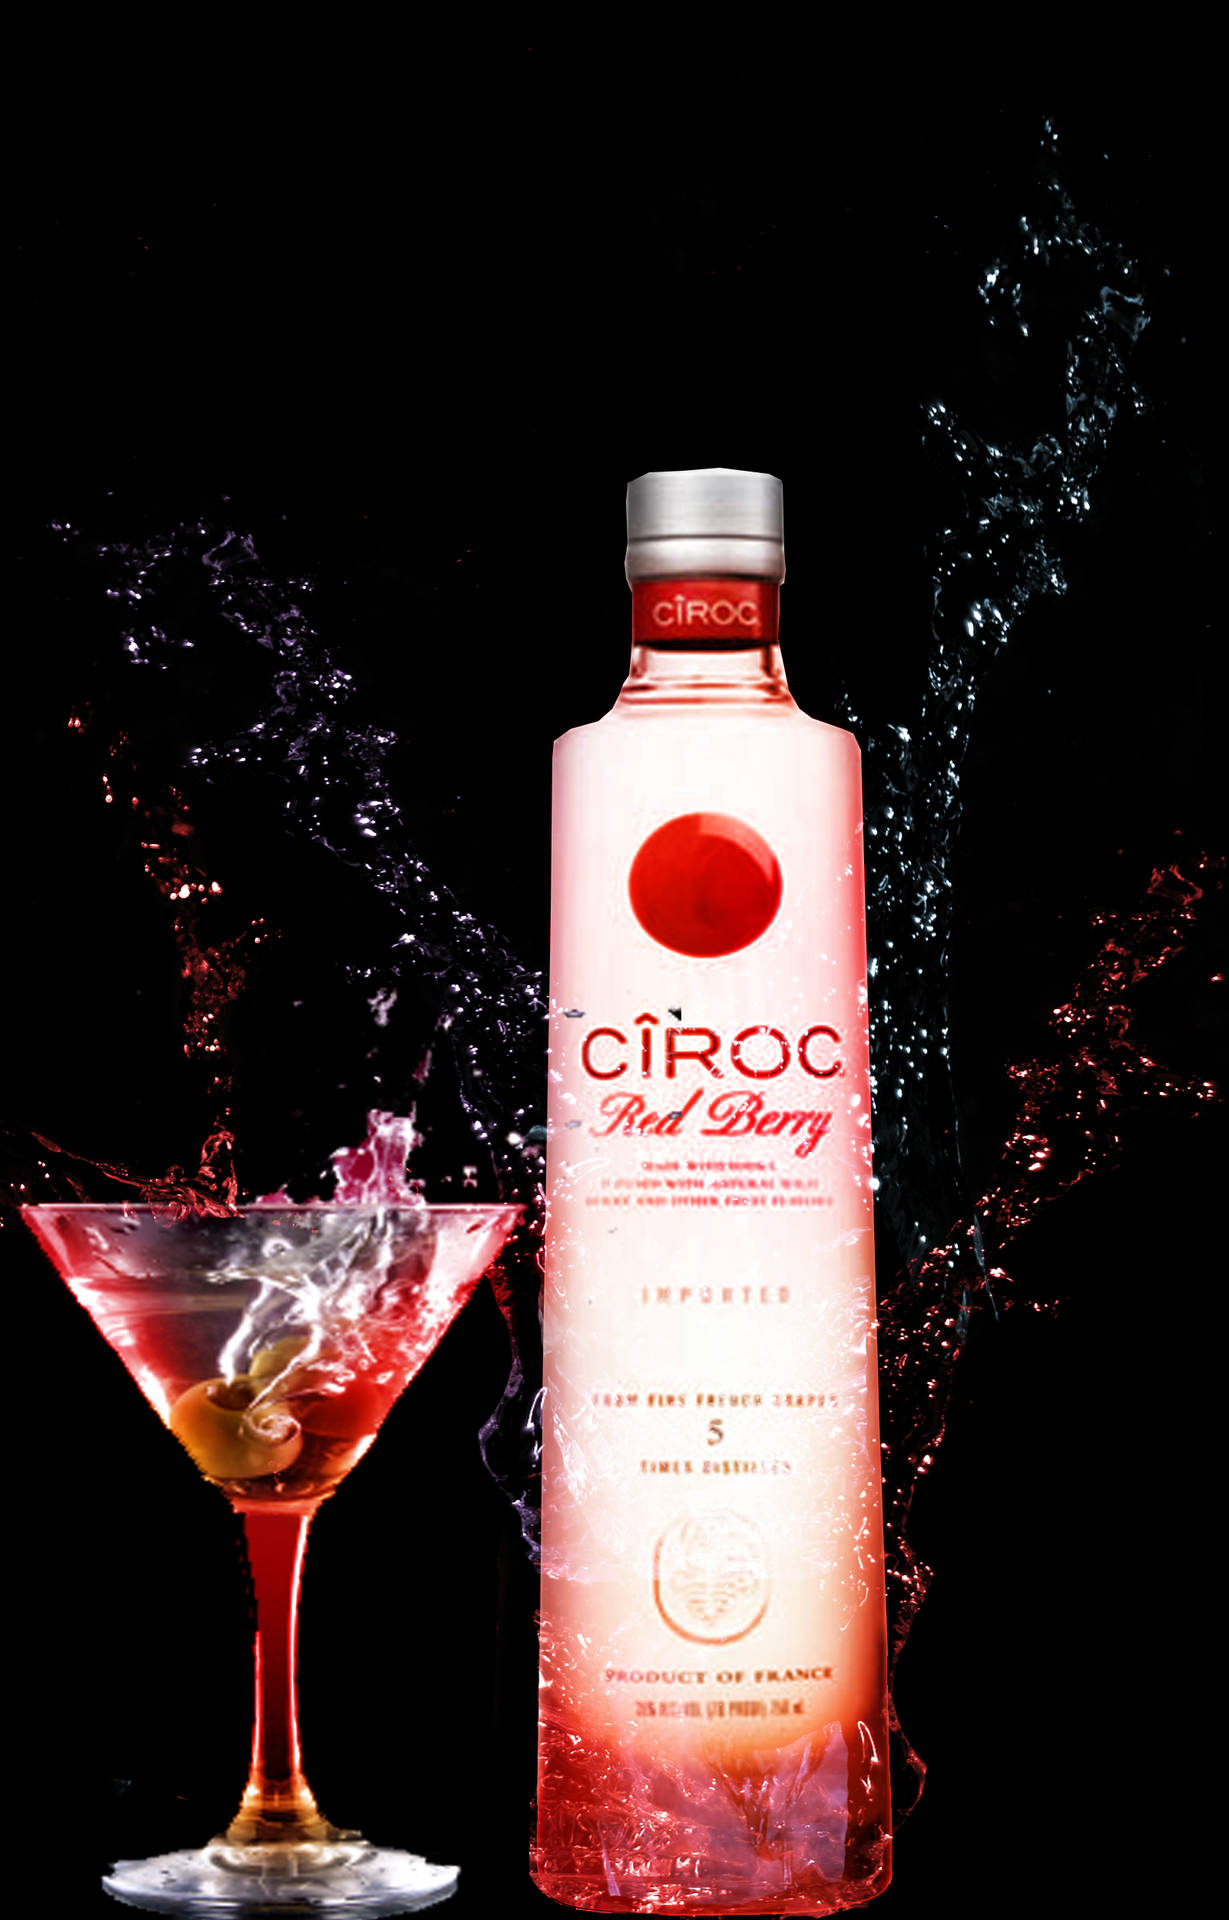 Ciroc French Vodka Red Berry Graphic Design Wallpaper